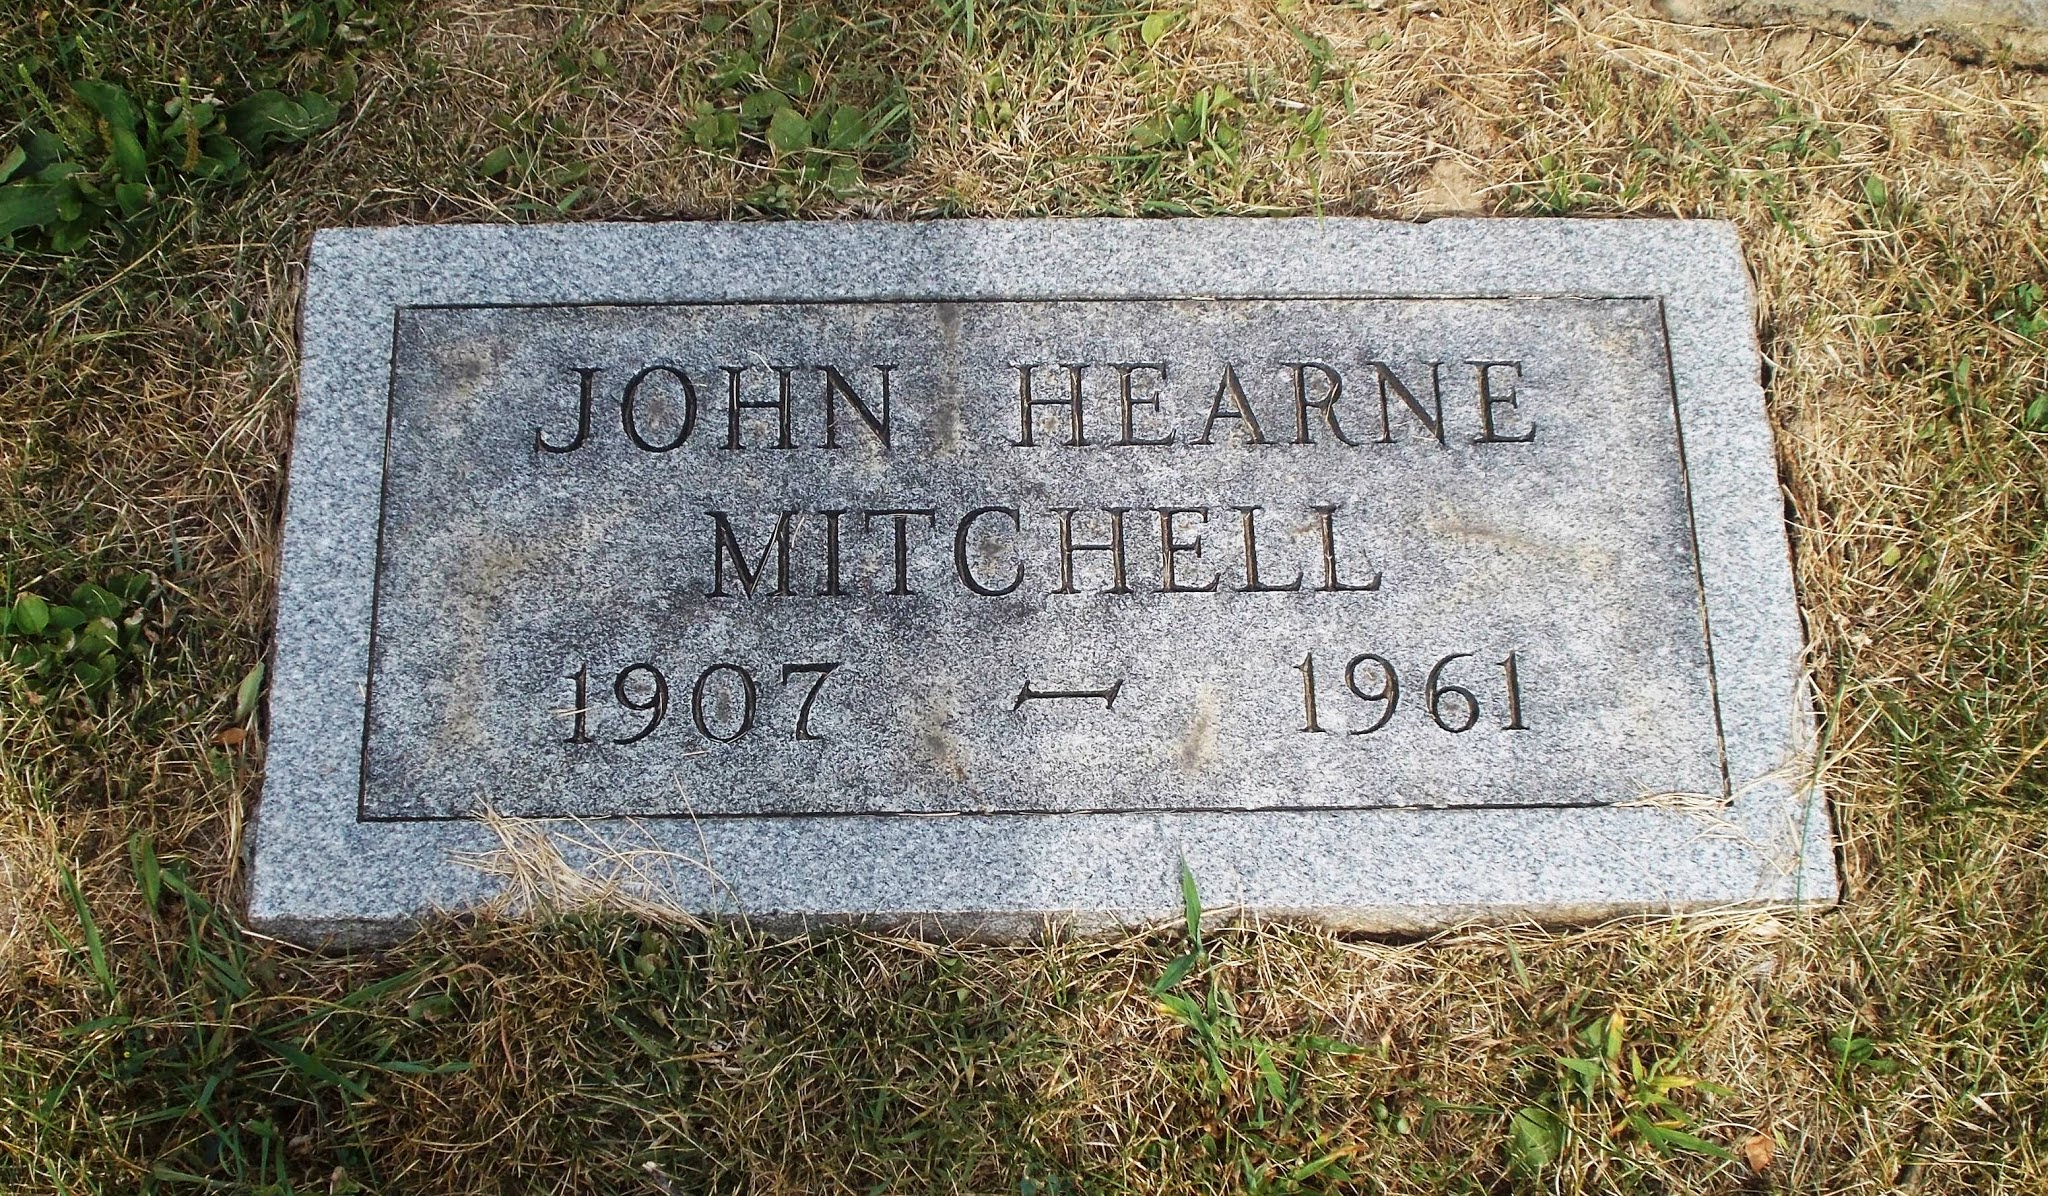 John Hearne Mitchell